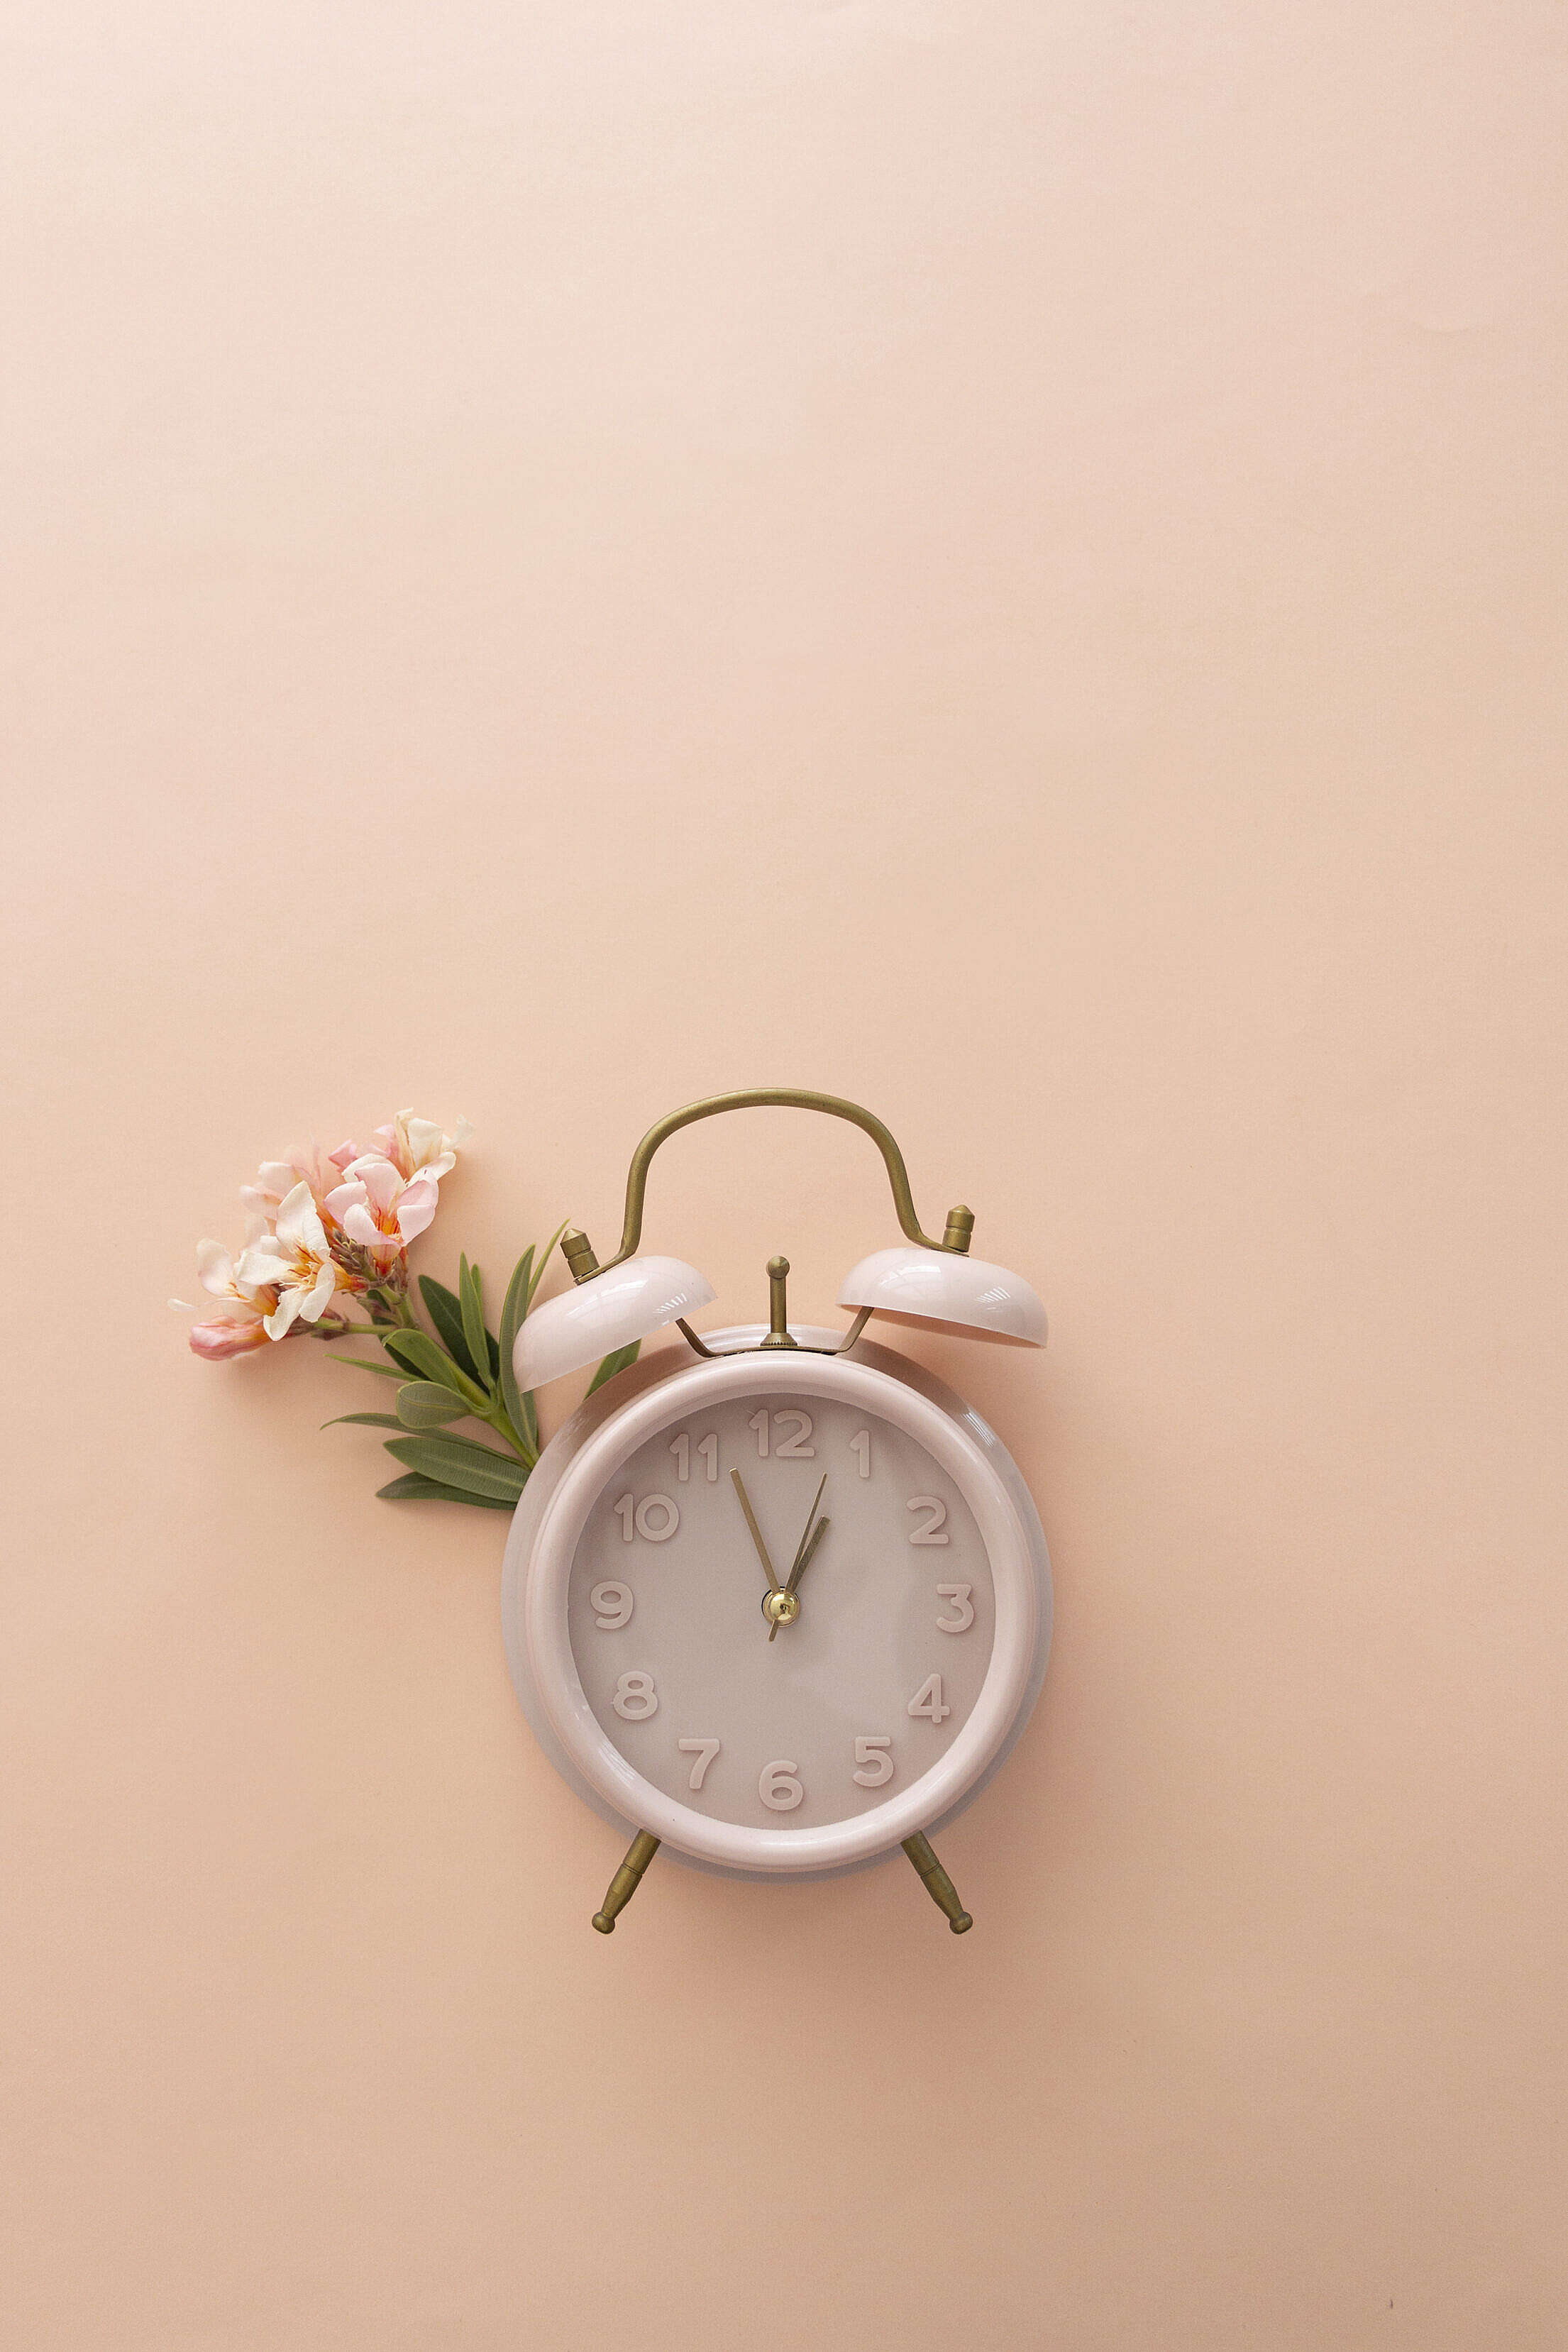 Retro Clock with Flower on Pastel Background Free Stock Photo  picjumbo